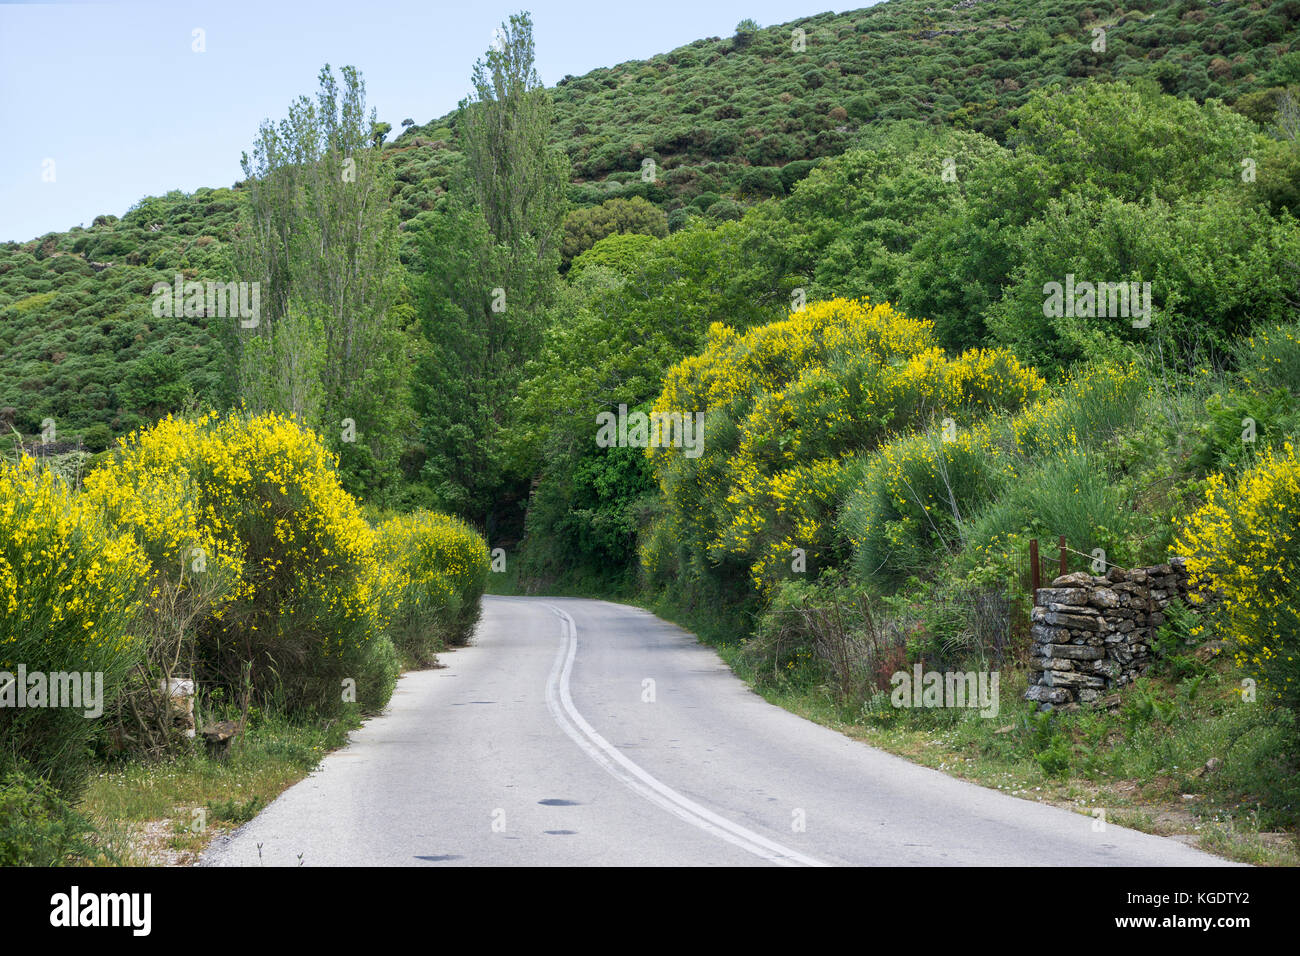 Lush vegetation at a road, north of Naxos island, Cyclades, Greece, Mediterranean Sea, Europe Stock Photo